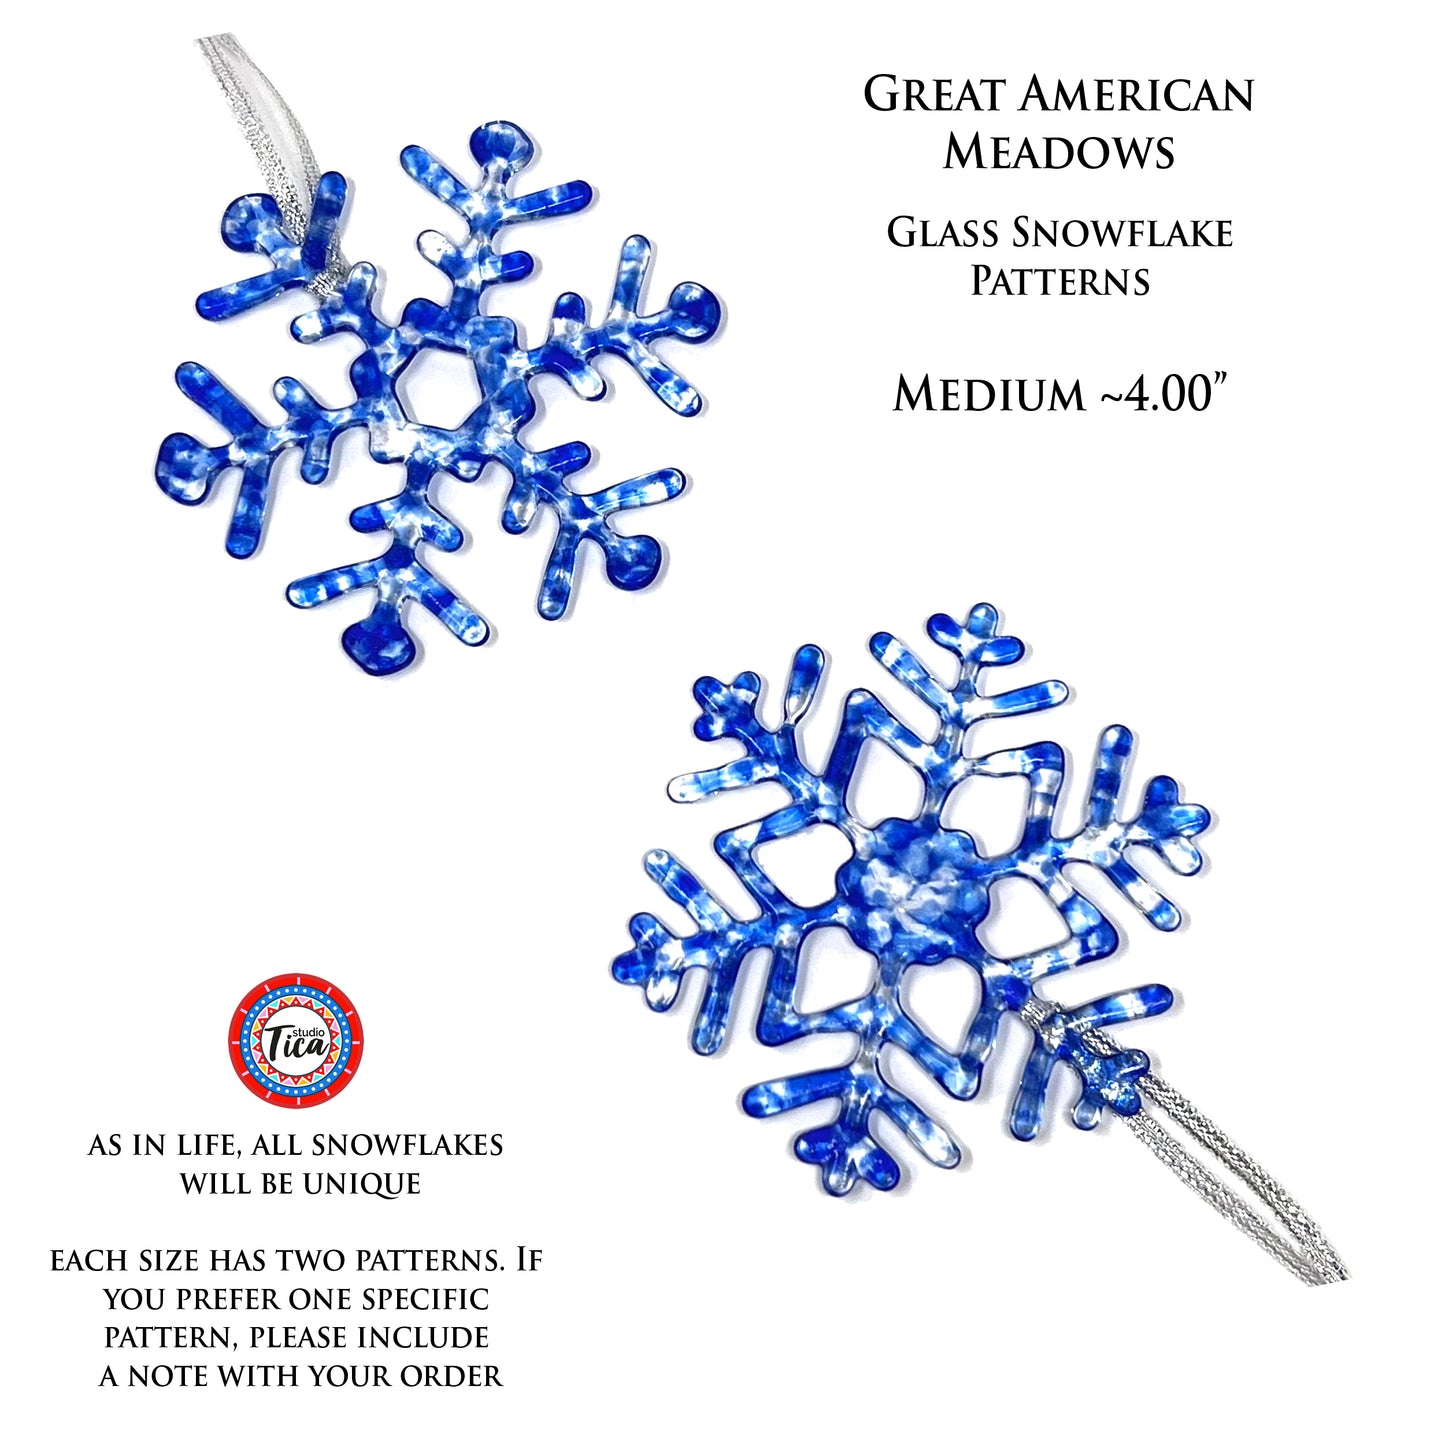 studioTica American Meadows - Handmade Glass Snowflakes